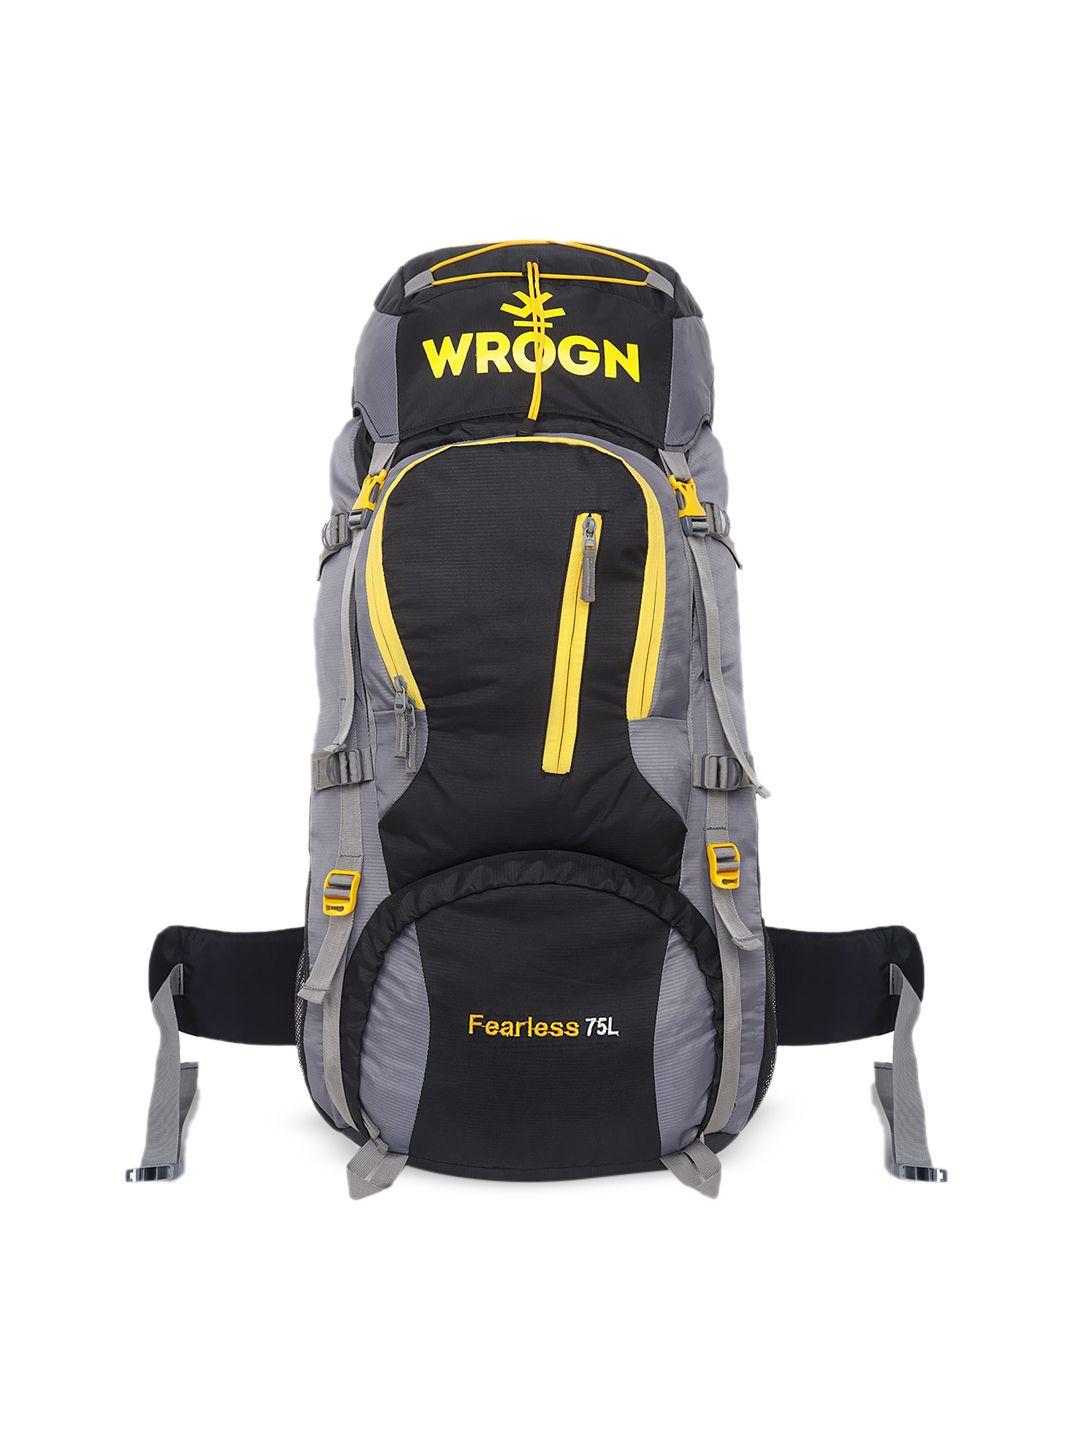 wrogn logo printed waterproof rucksacks with rain cover